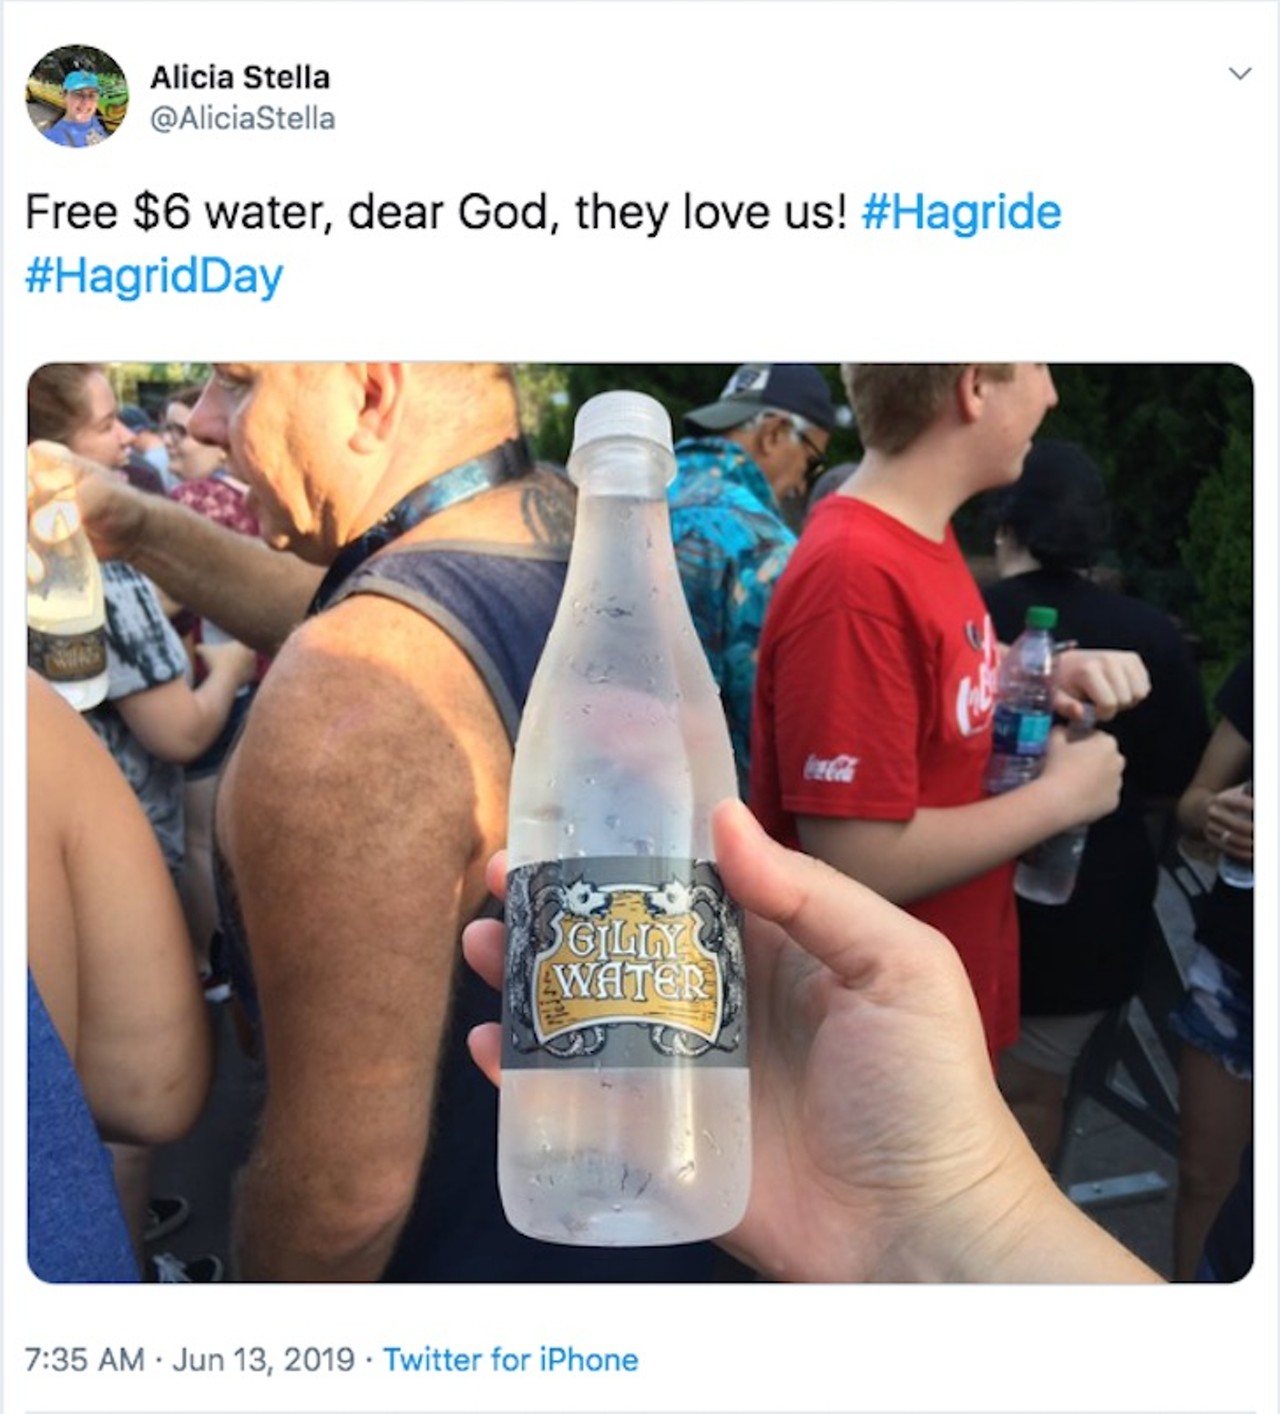 @AliciaStella
"Free $6 water, dear God, they love us! #Hagride #HagridDay"